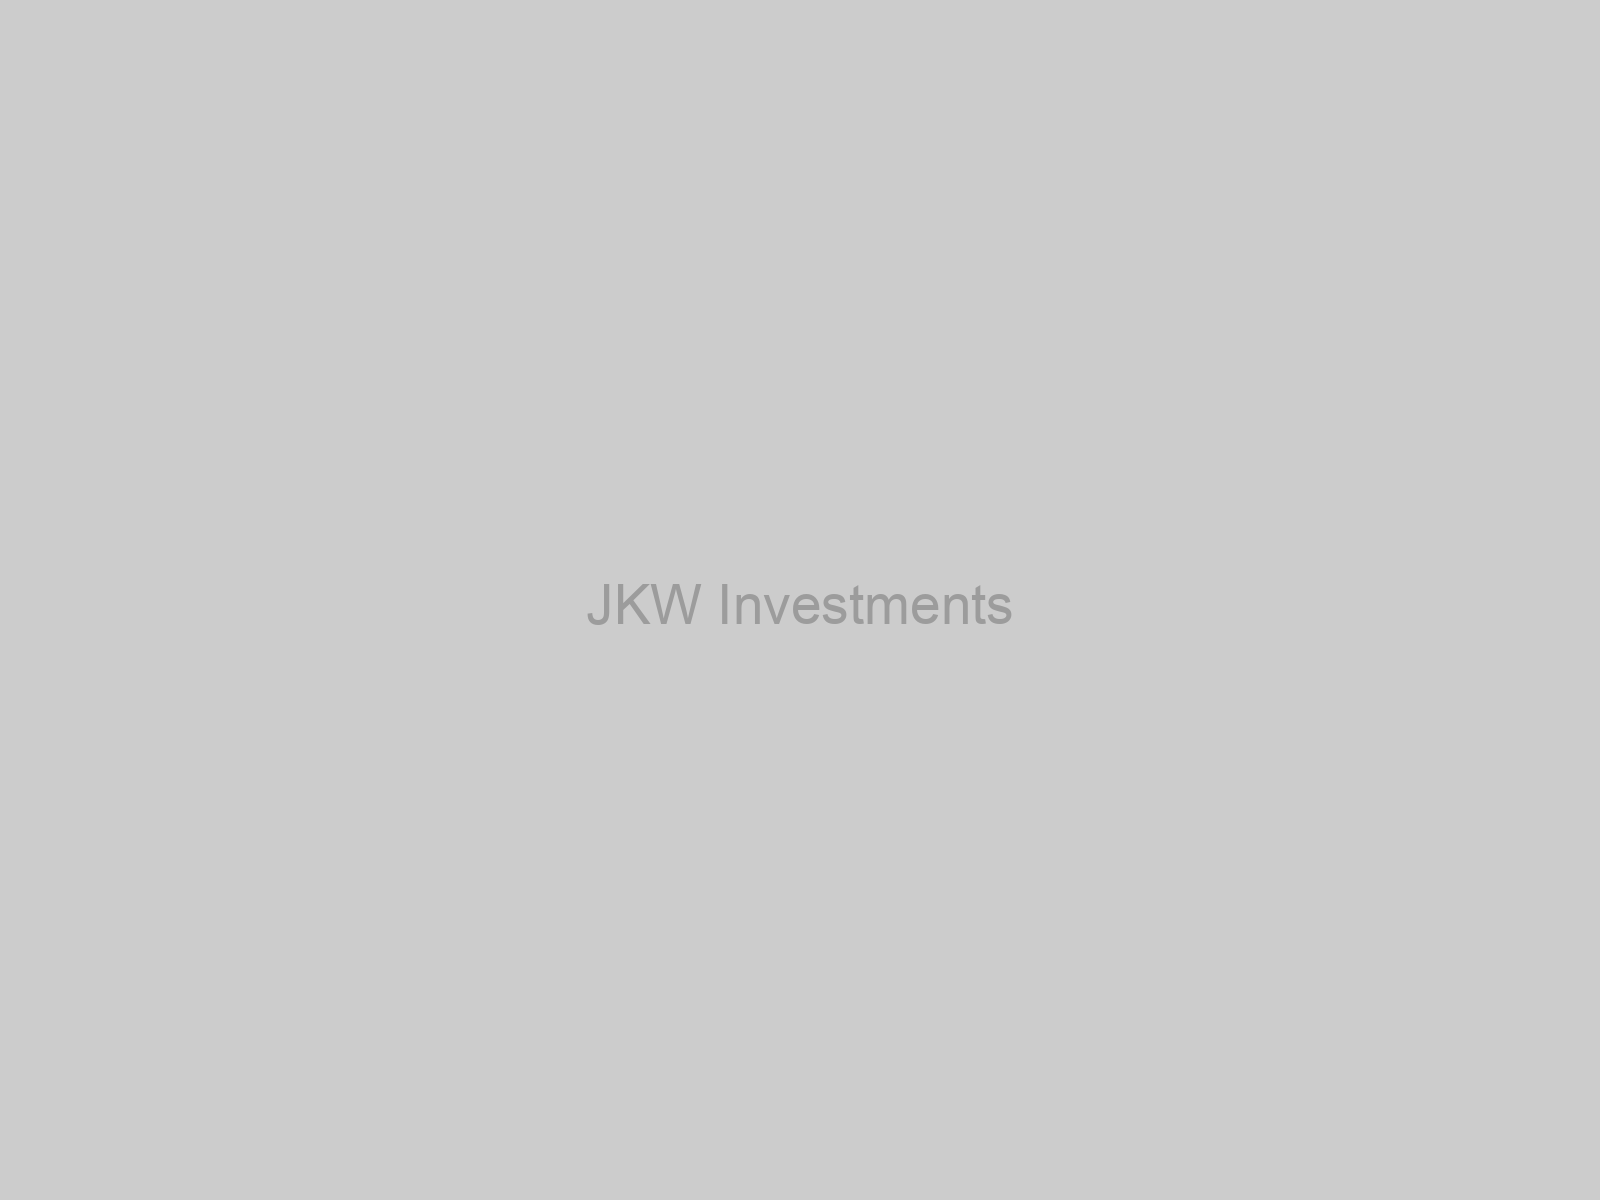 JKW Investments